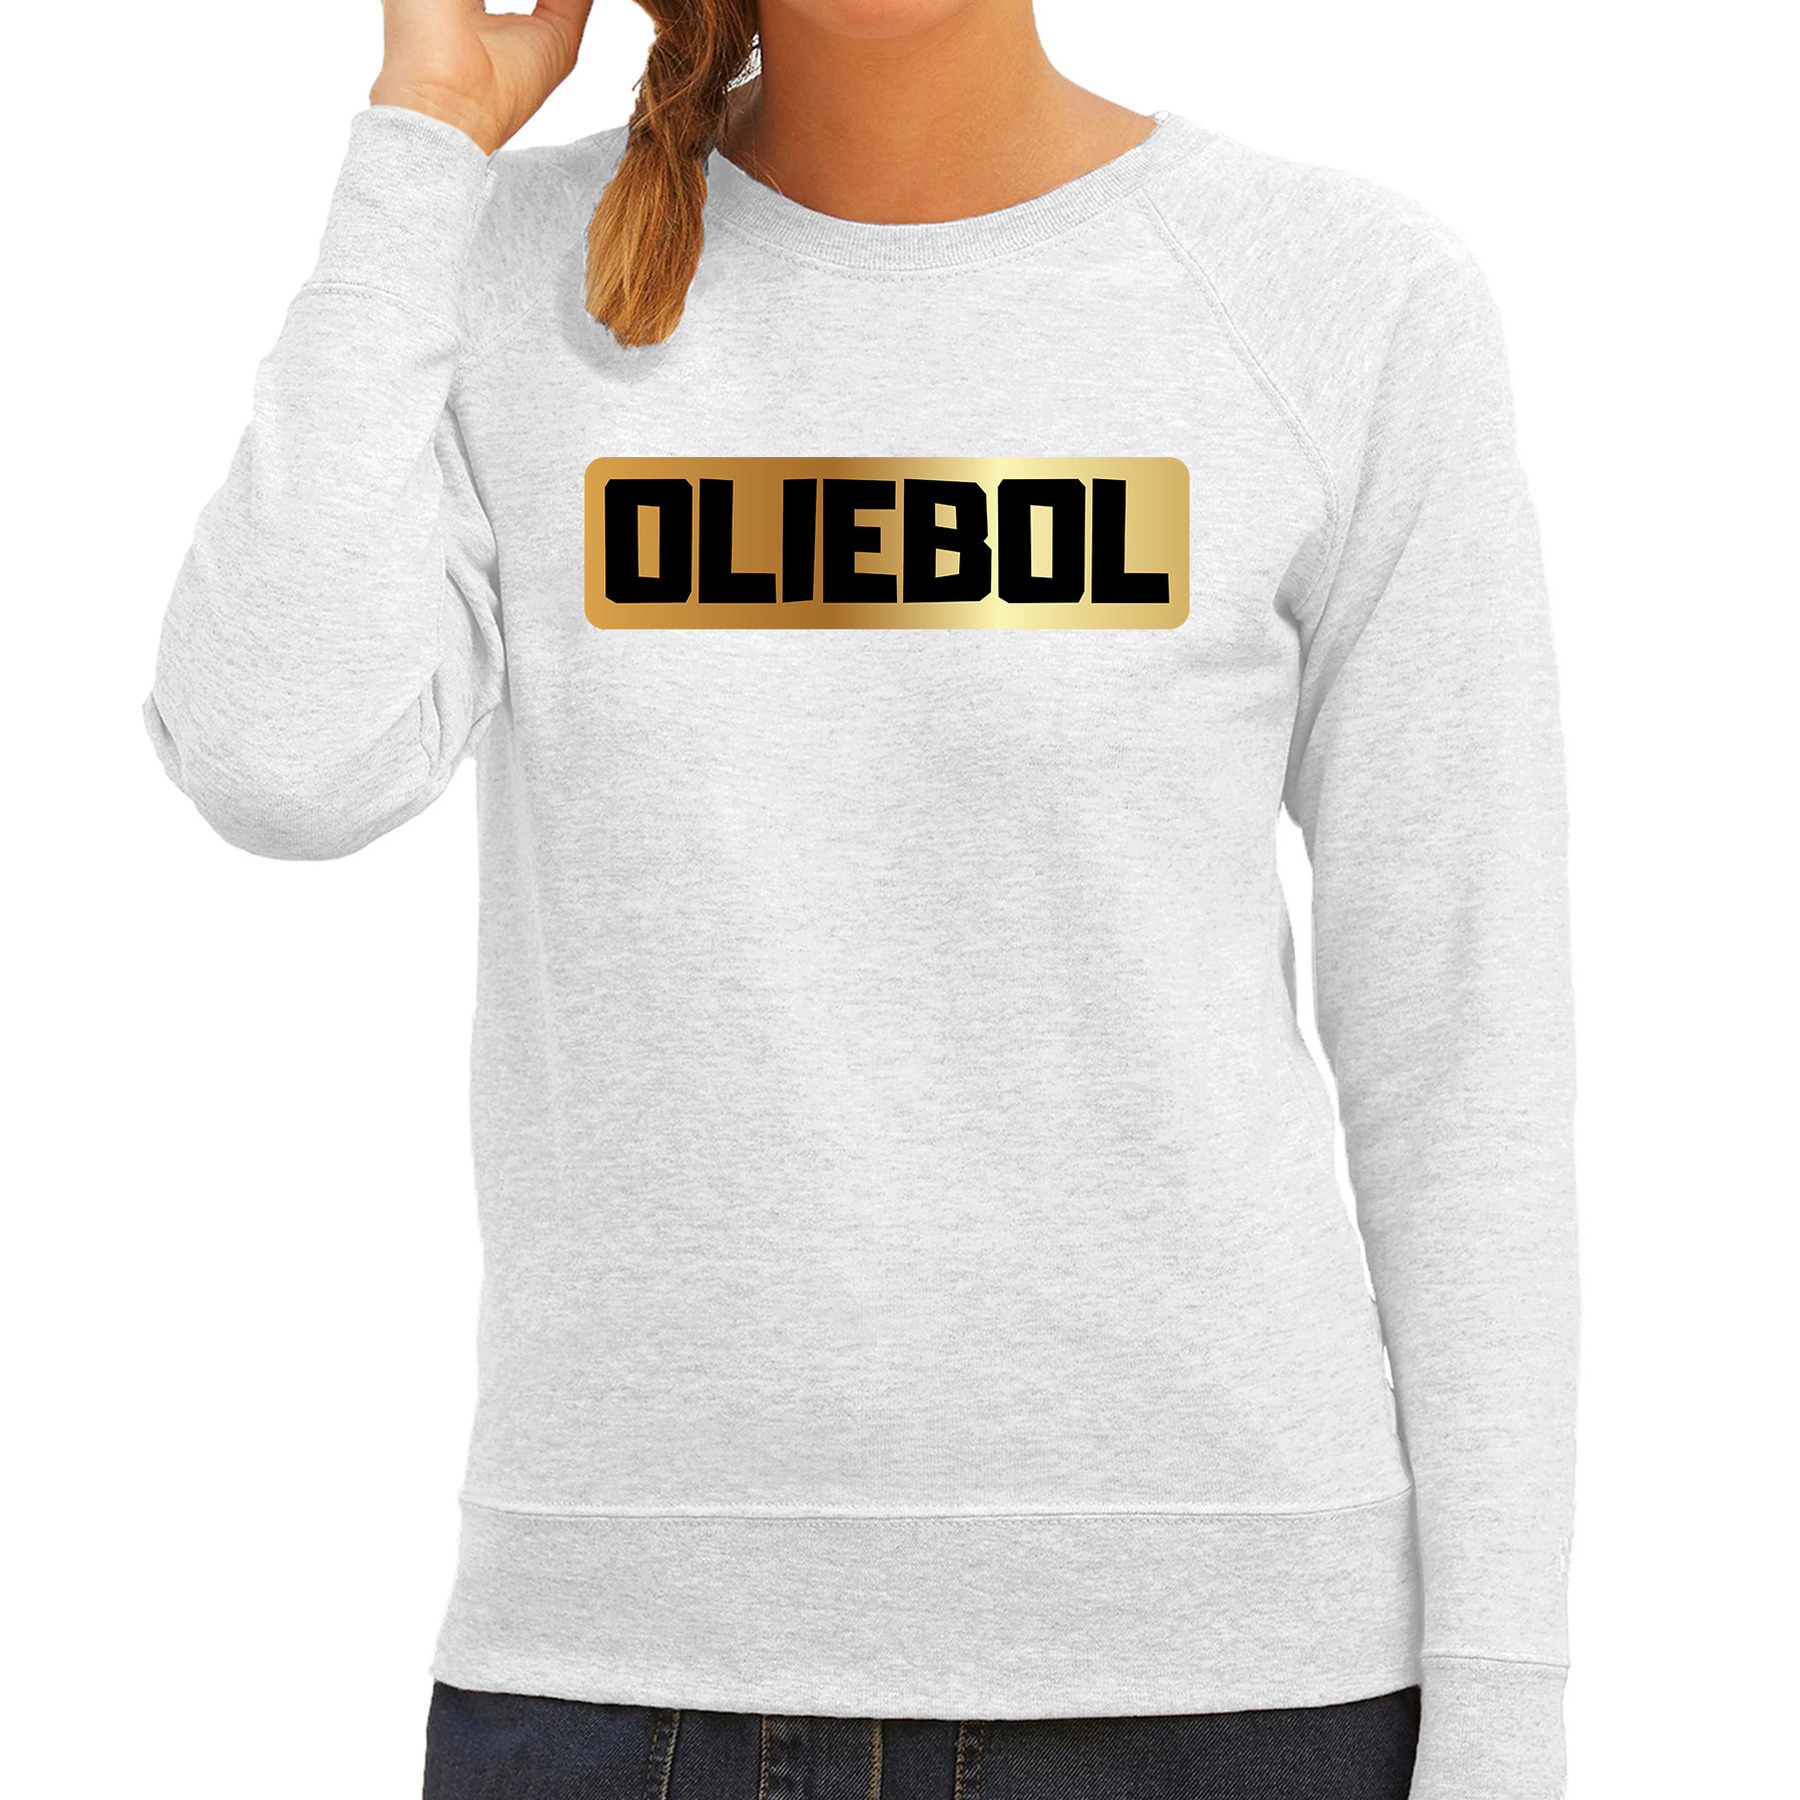 Oliebol foute Oud en Nieuw sweater-kleding voor dames